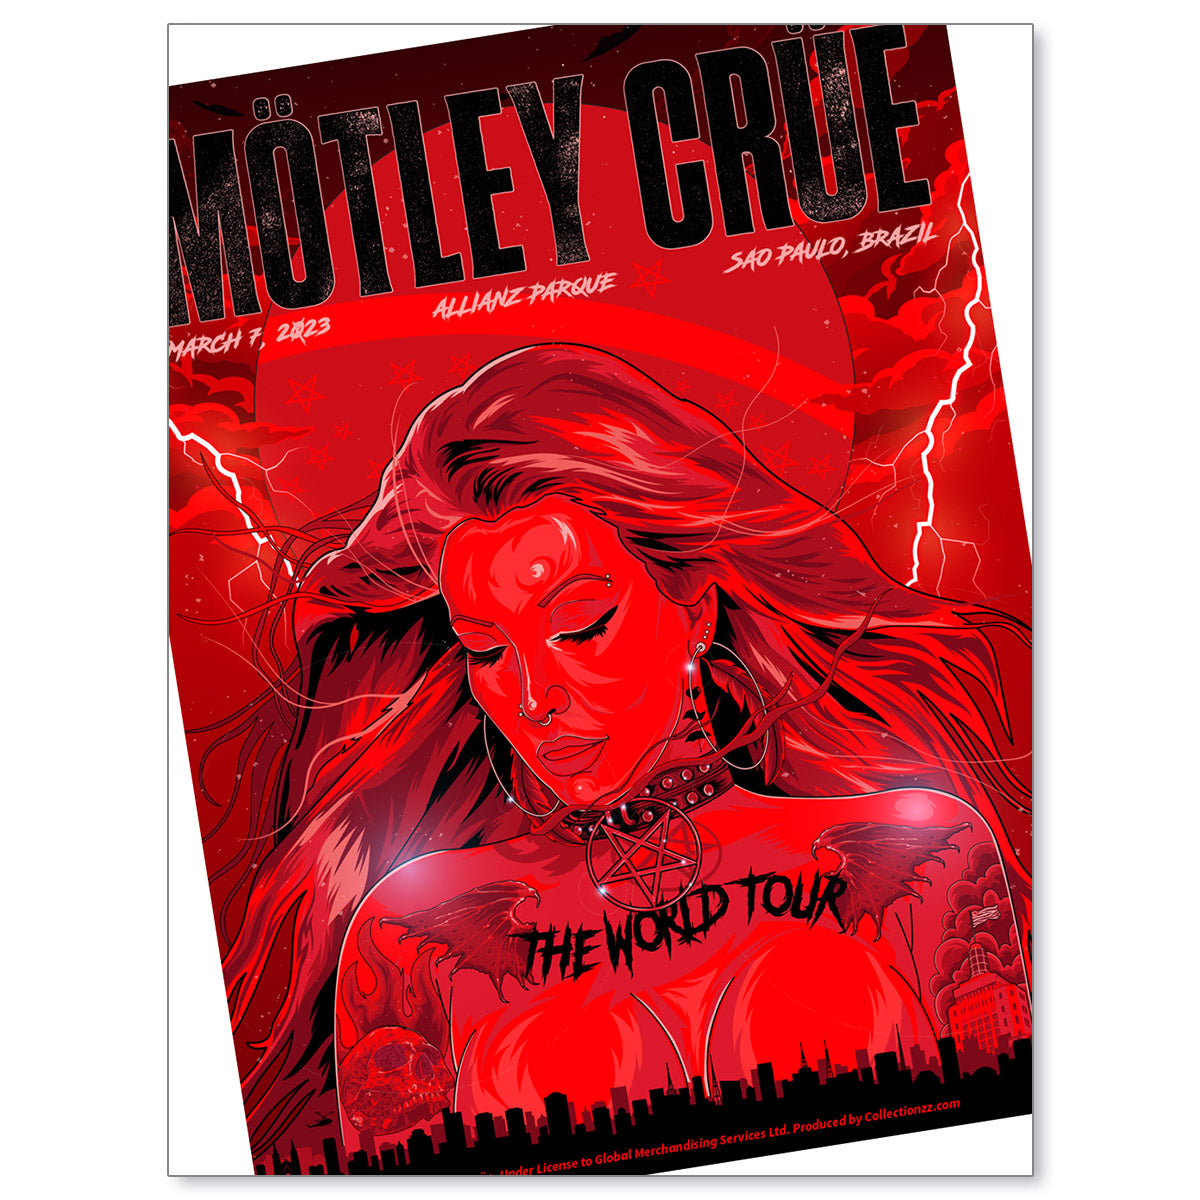 Mötley Crüe Sao Paulo March 7, 2023 The World Tour